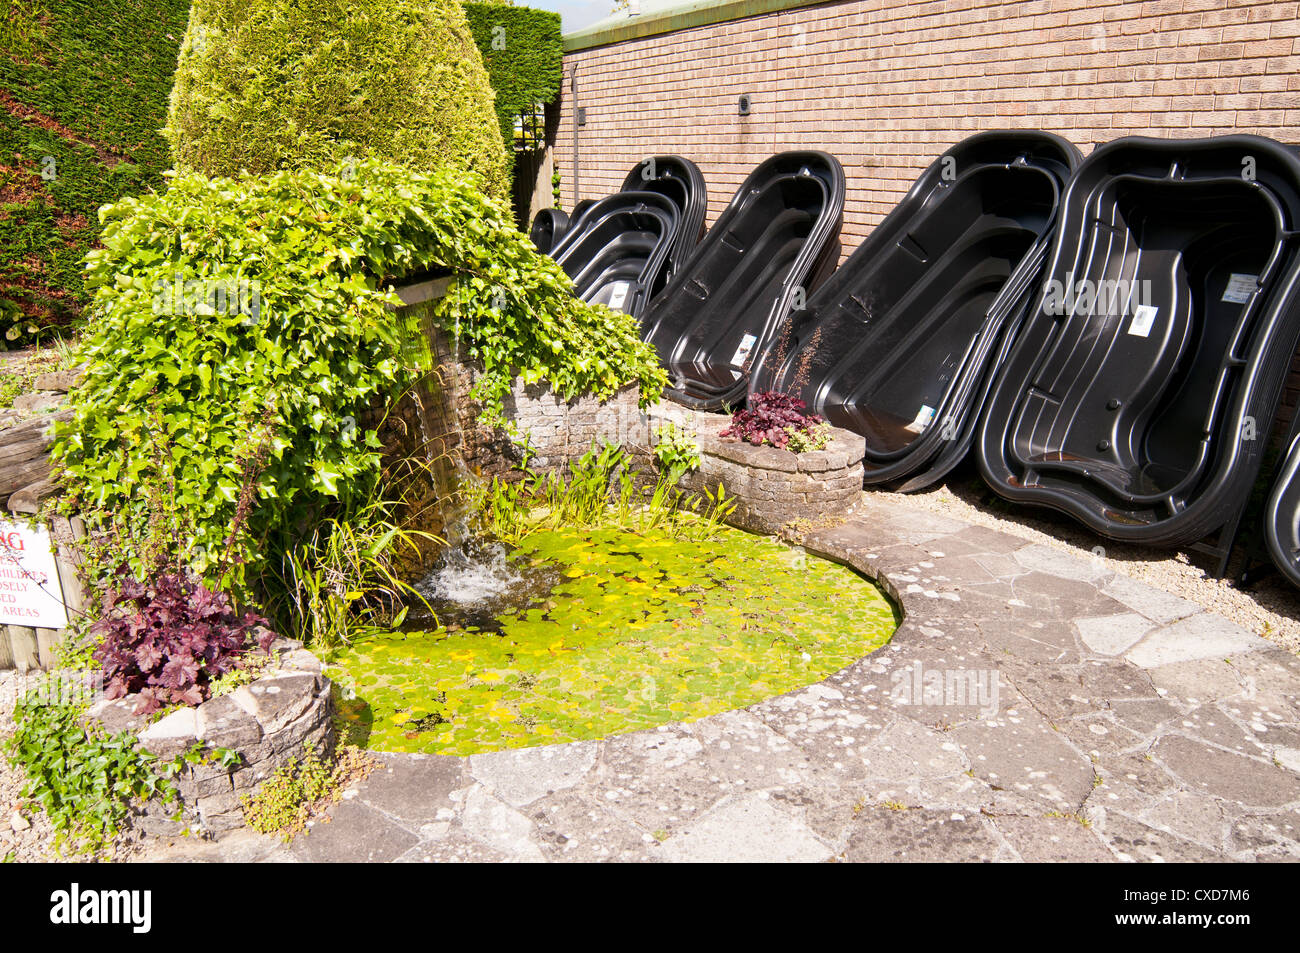 Display of black plastic moulds for pond building at garden centre, UK Stock Photo